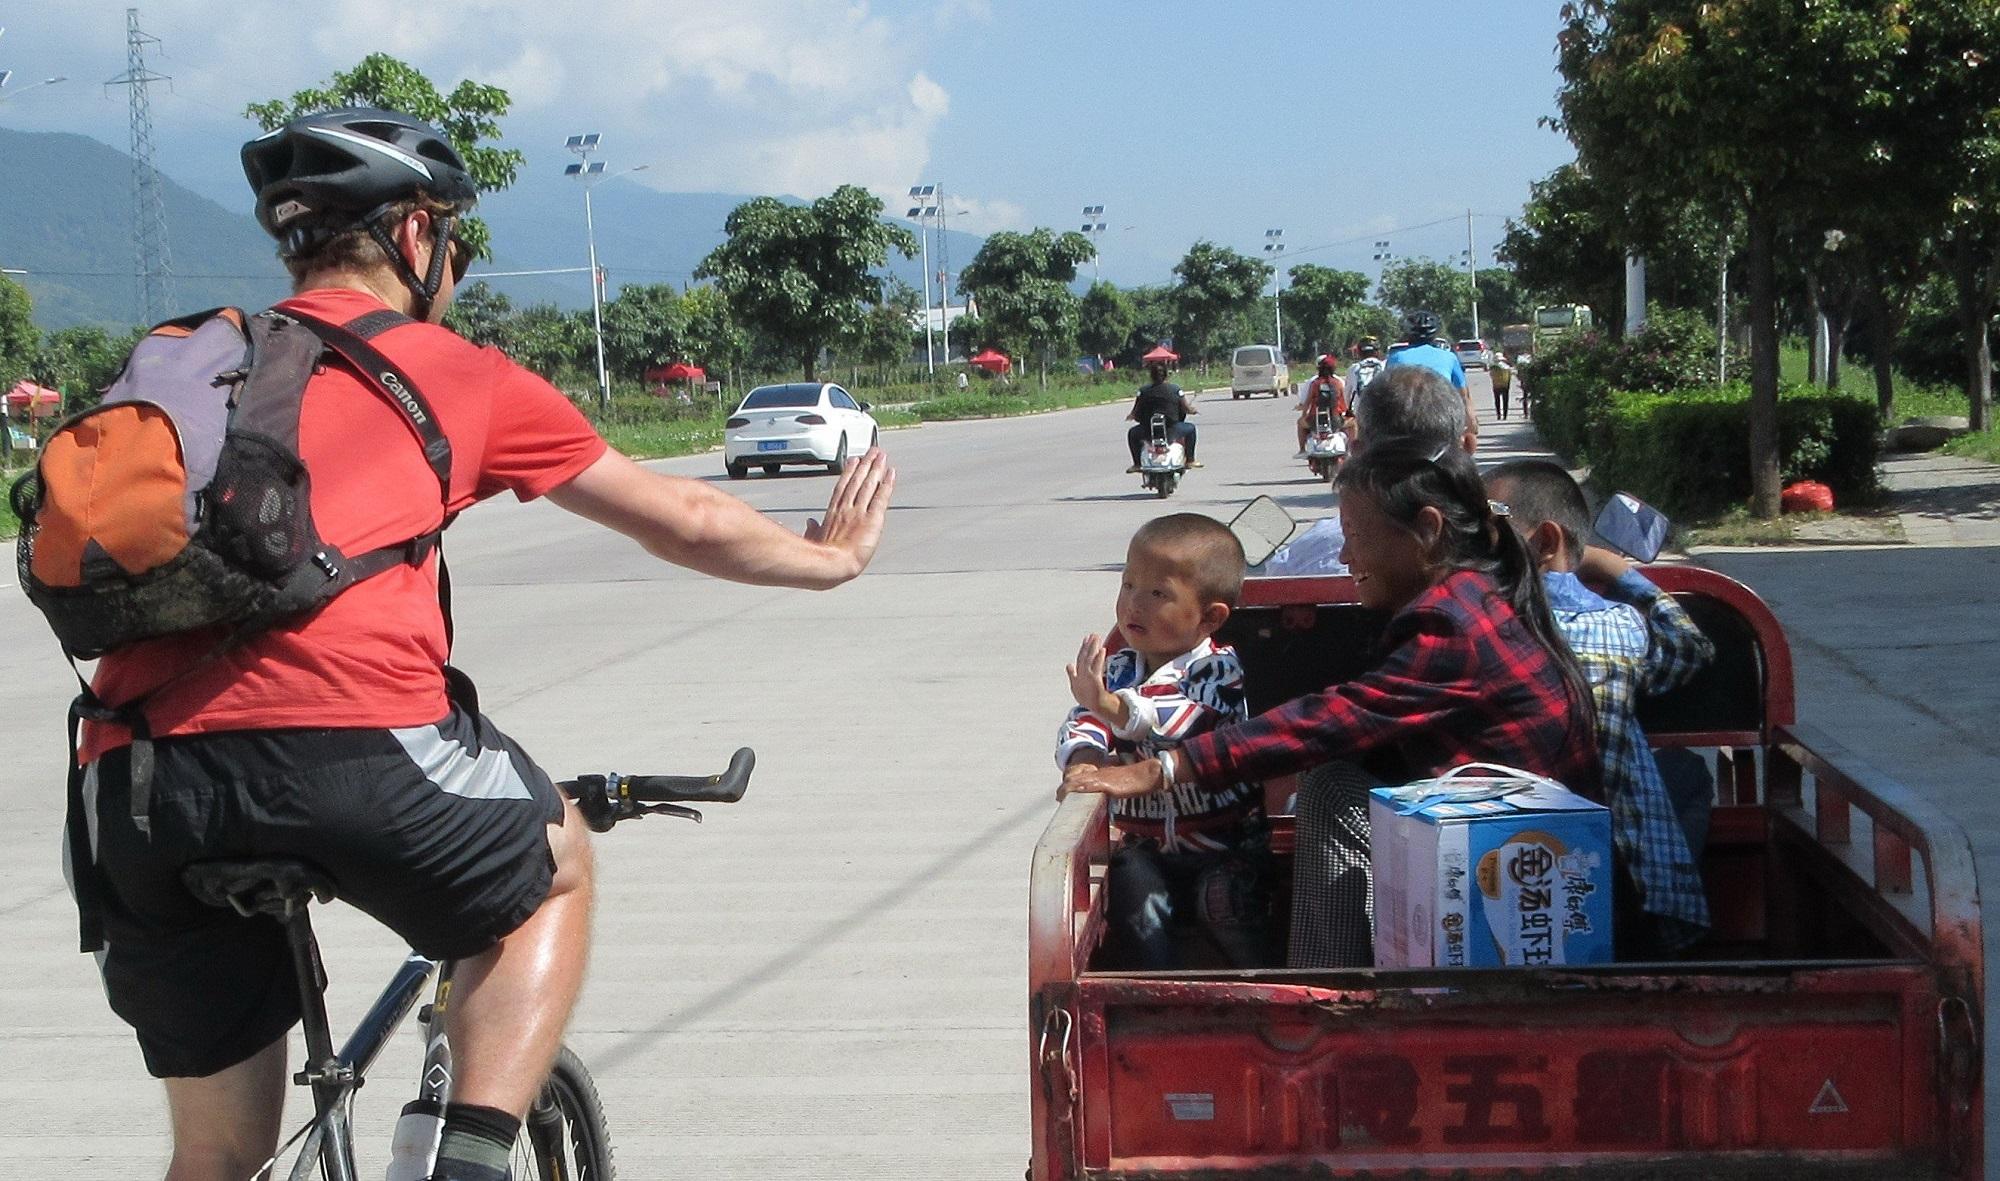 Photos from our China - Yunnan Cycling Holiday